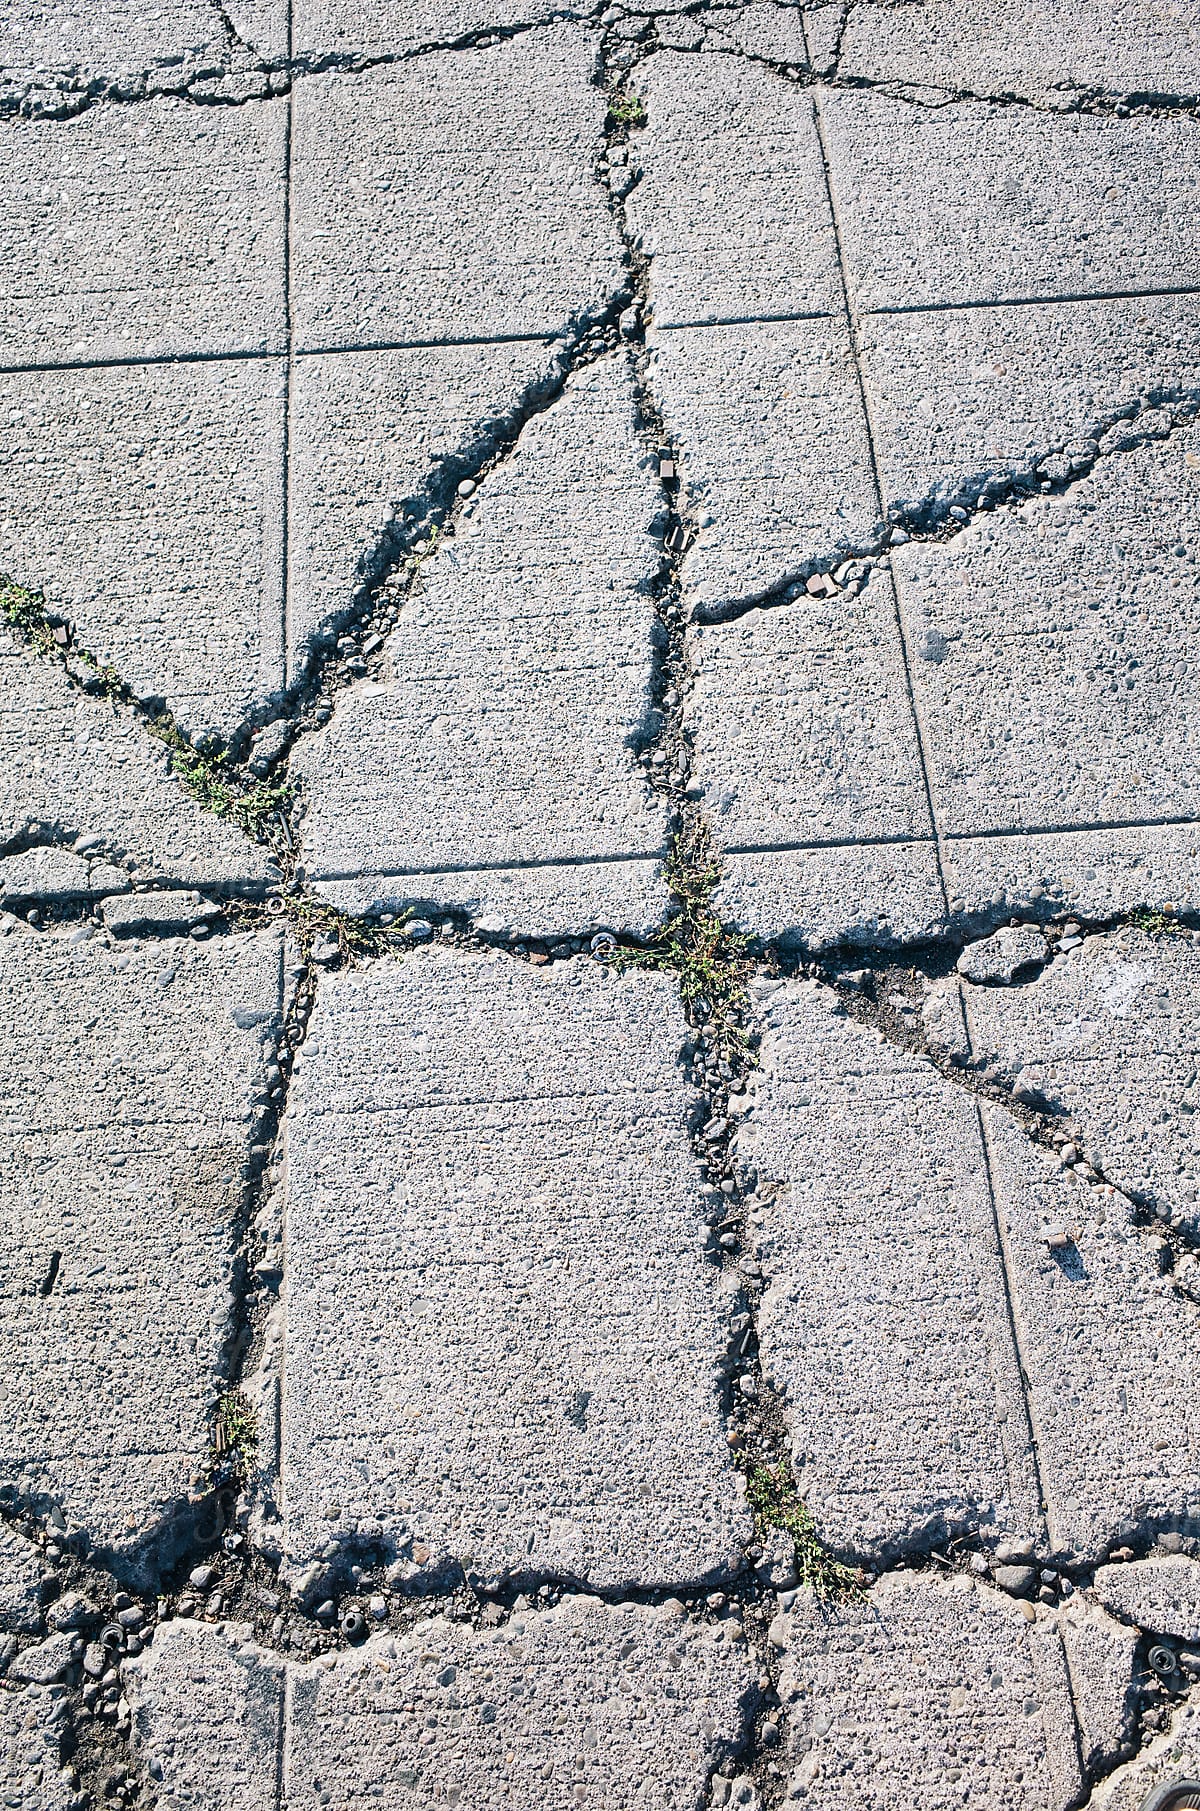 Detail of cracked and worn urban sidewalk